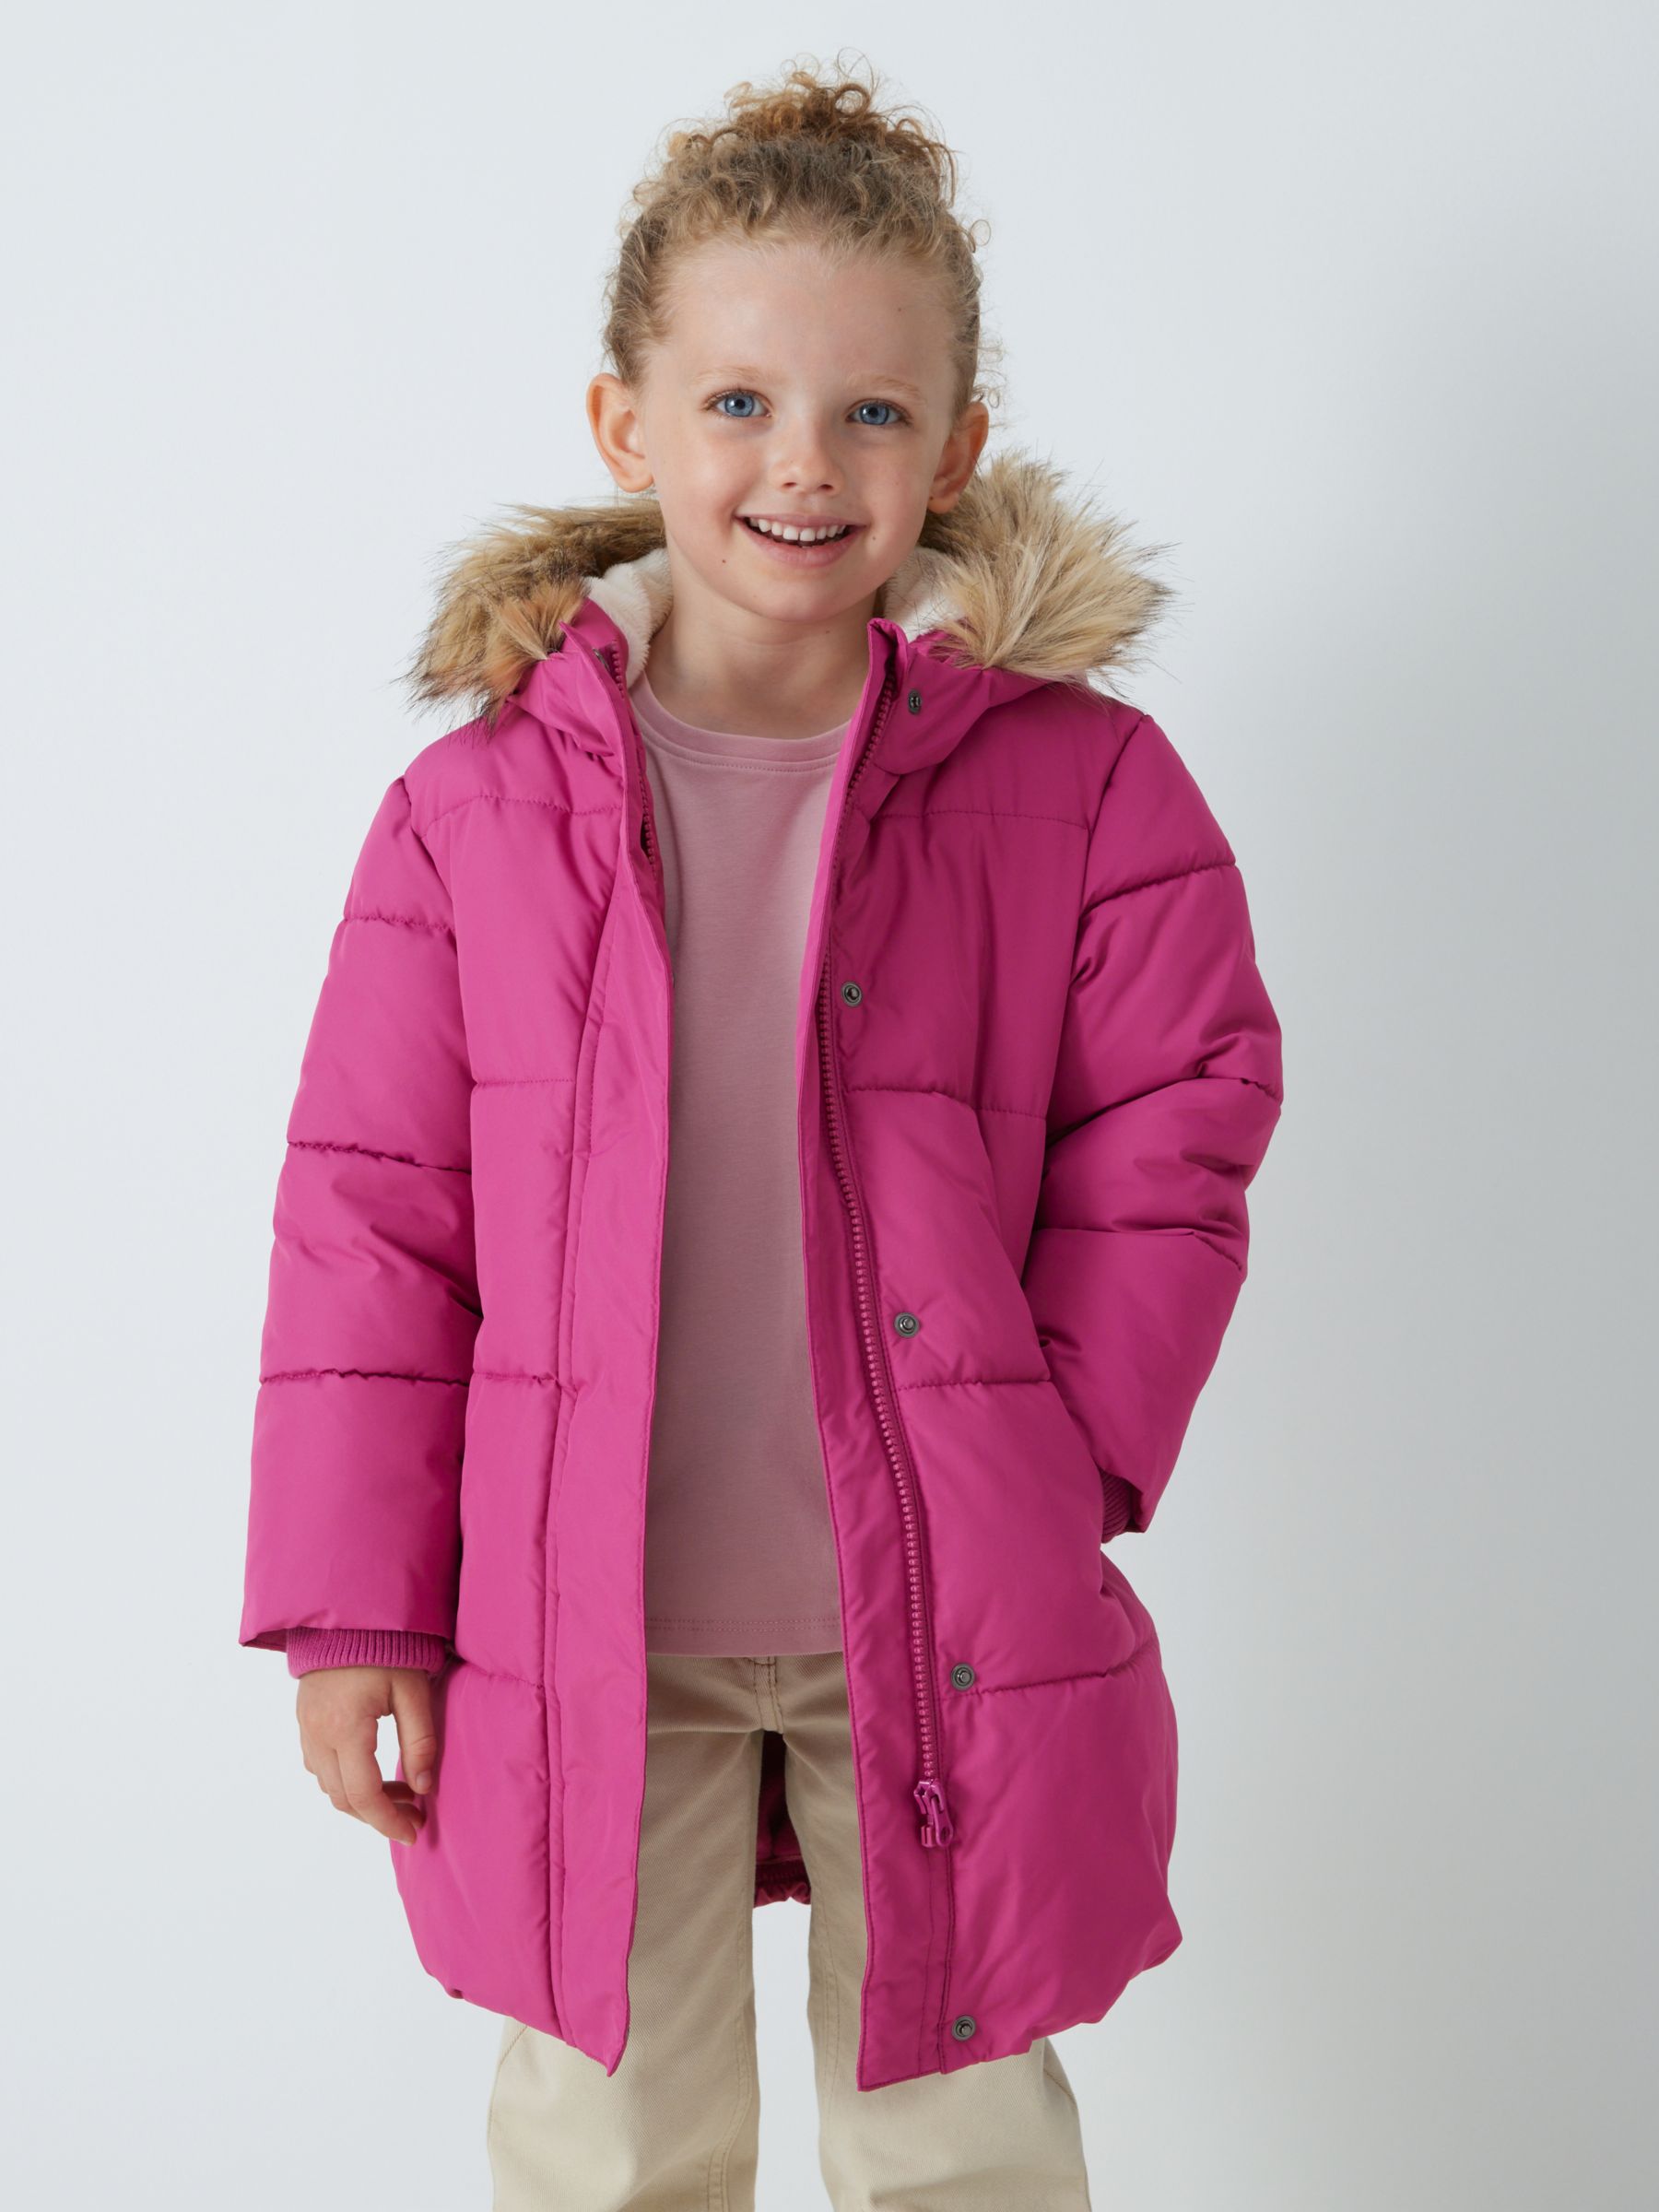 Hatley Kids' Glitter Star Print Fleece Lined Rain Coat, Raspberry